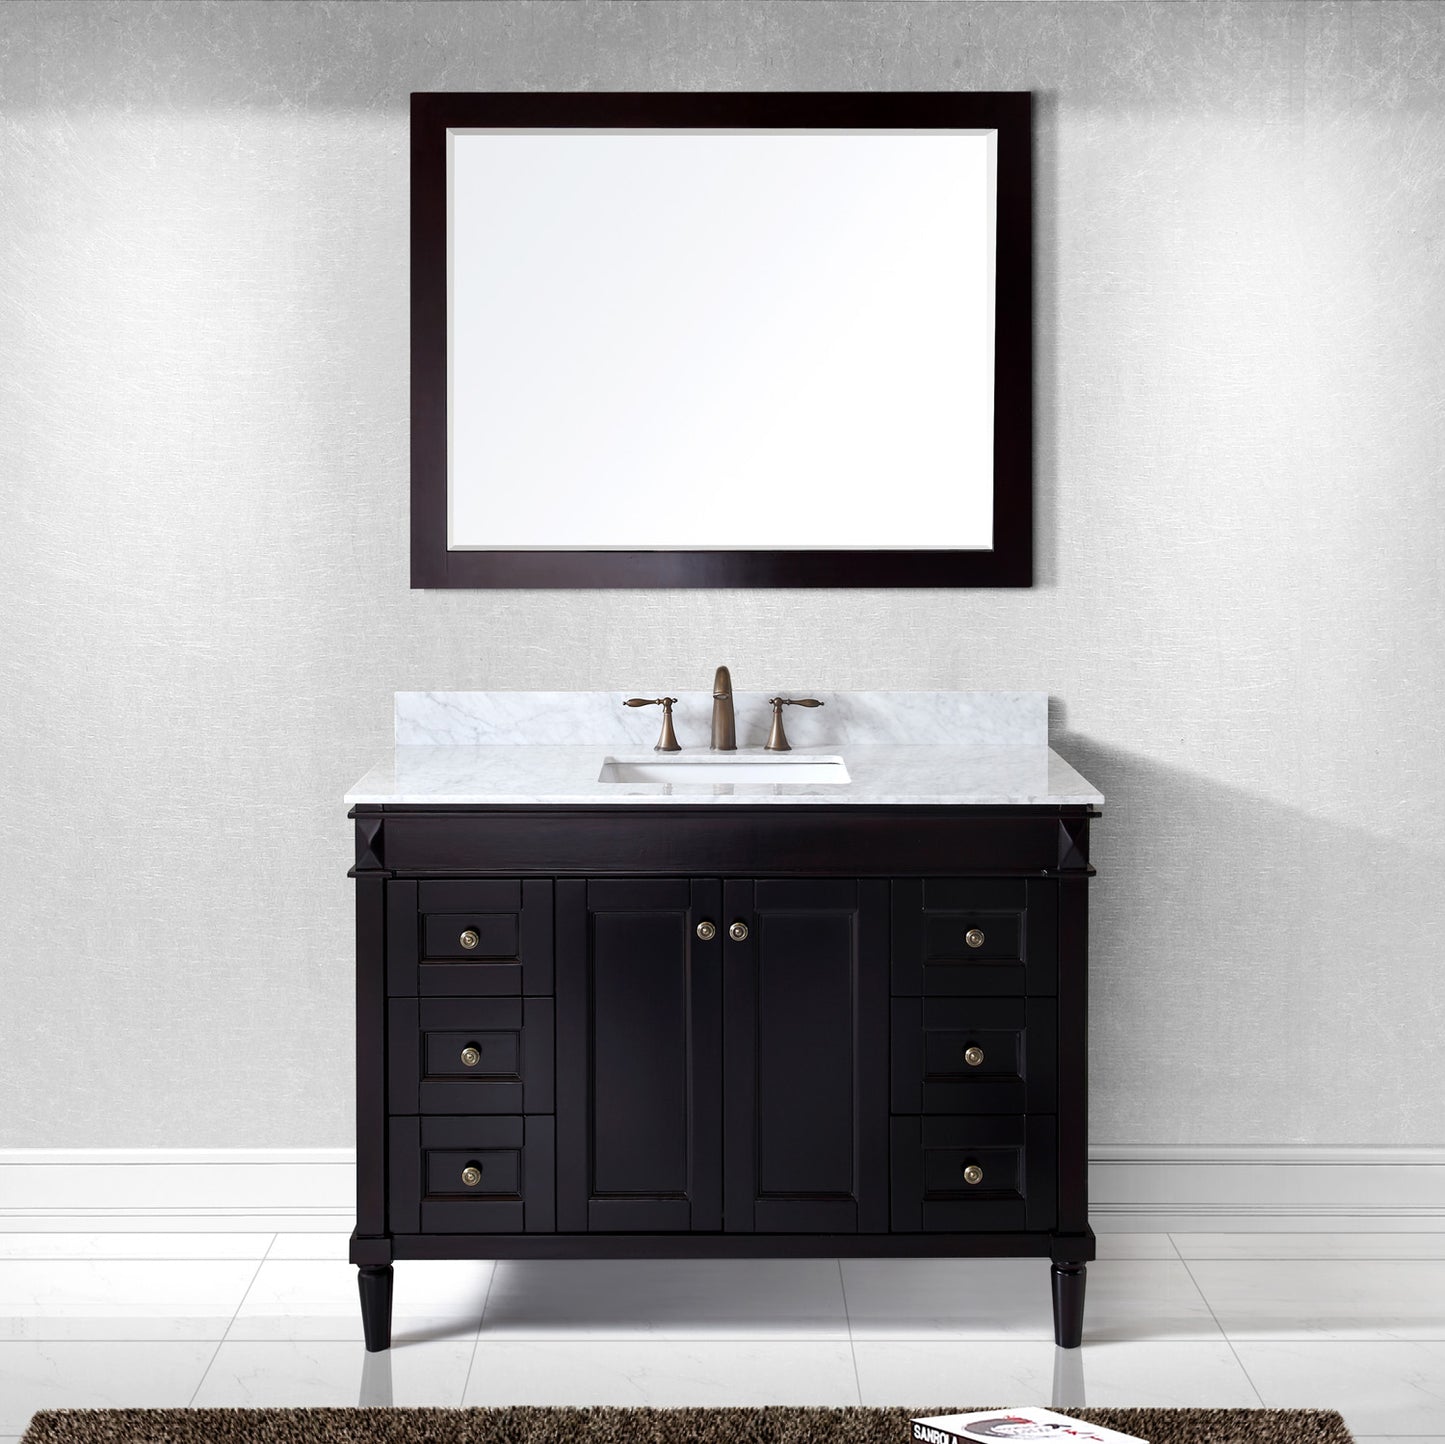 Virtu USA Tiffany 48" Single Bath Vanity in Espresso with Marble Top and Square Sink with Mirror - Luxe Bathroom Vanities Luxury Bathroom Fixtures Bathroom Furniture